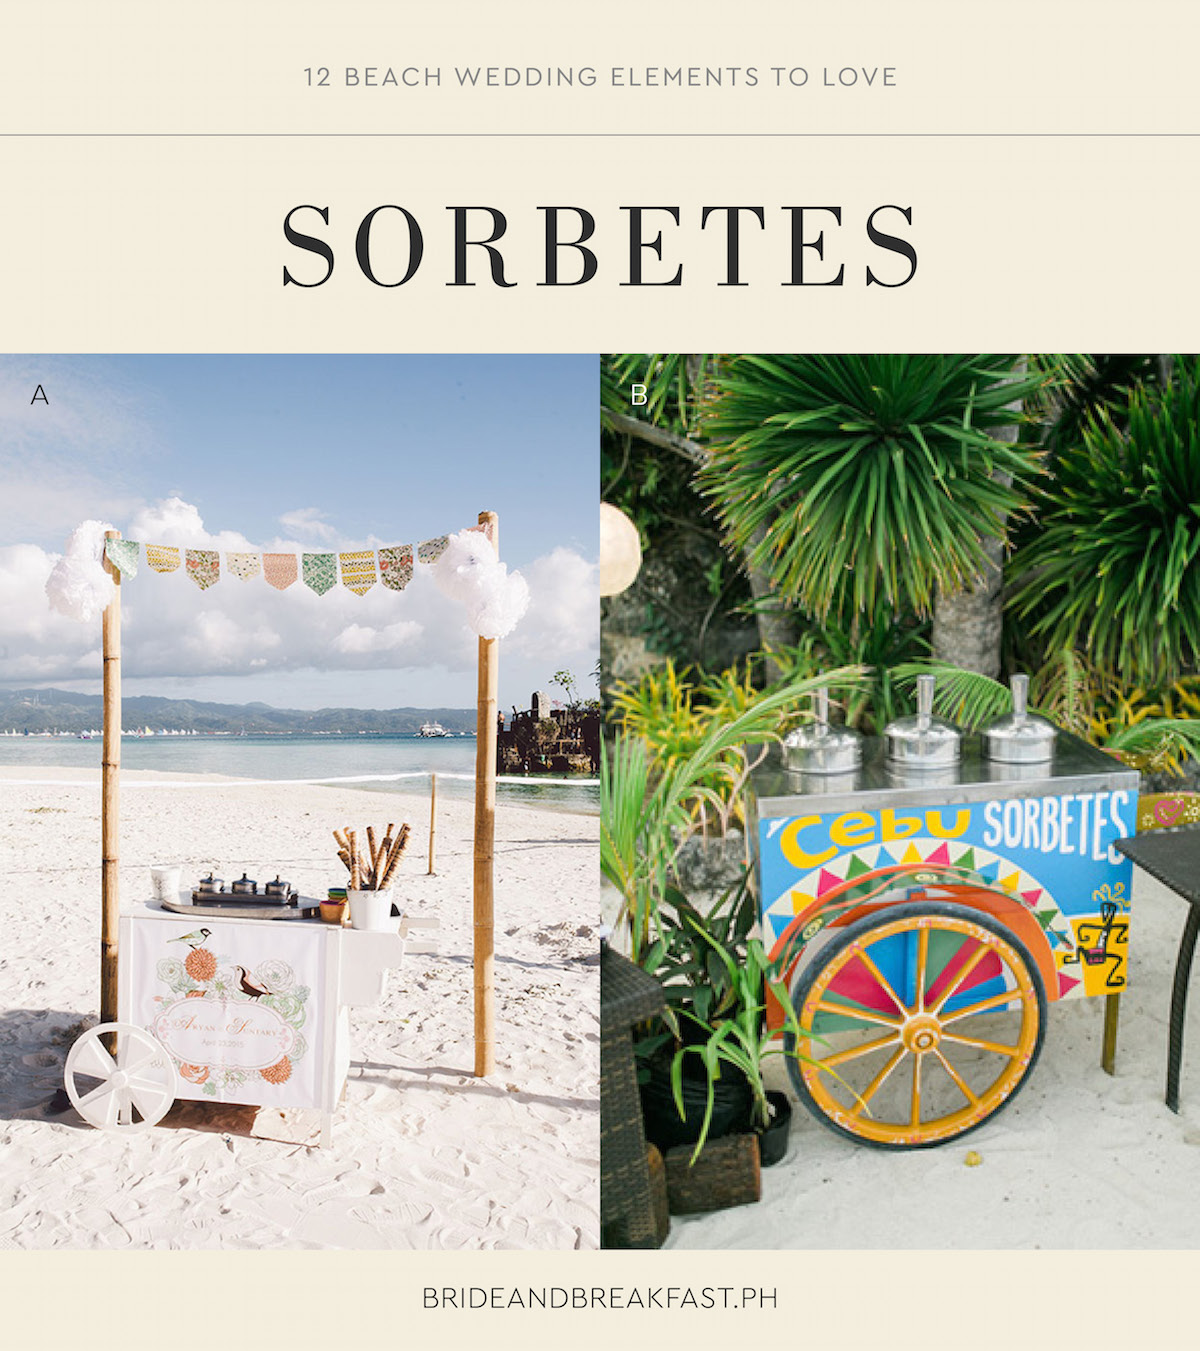 12 Beach Wedding Elements to Love Sorbetes